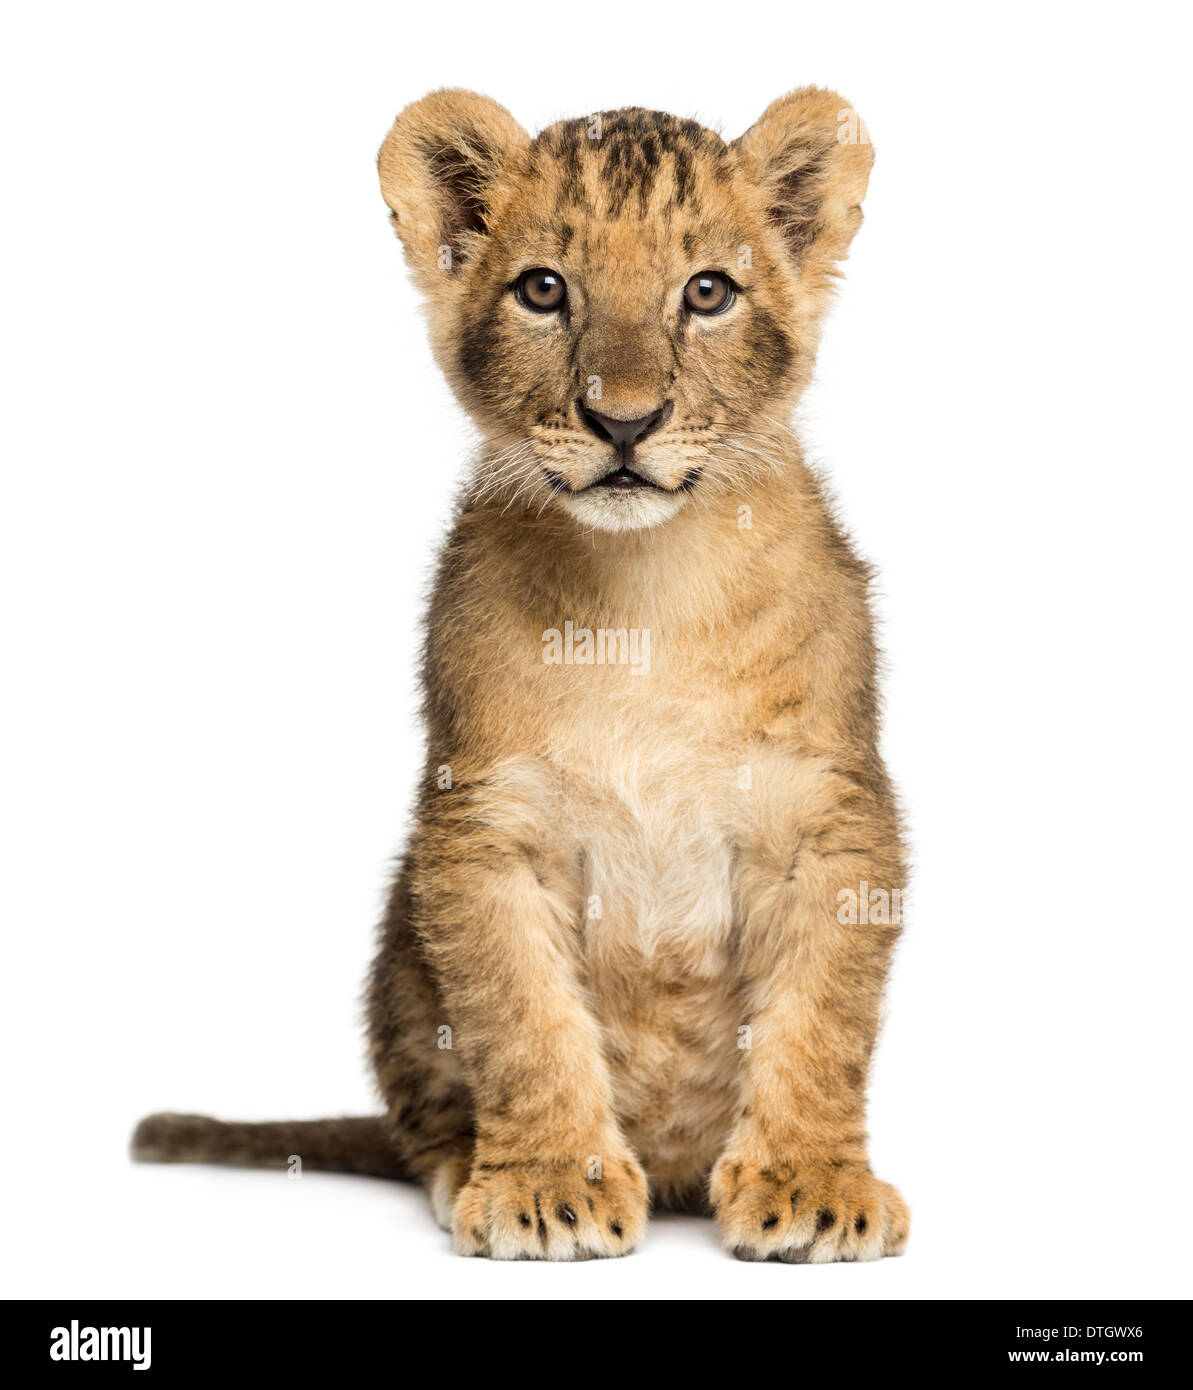 Lion cub Cut Out Stock Images & Pictures - Alamy